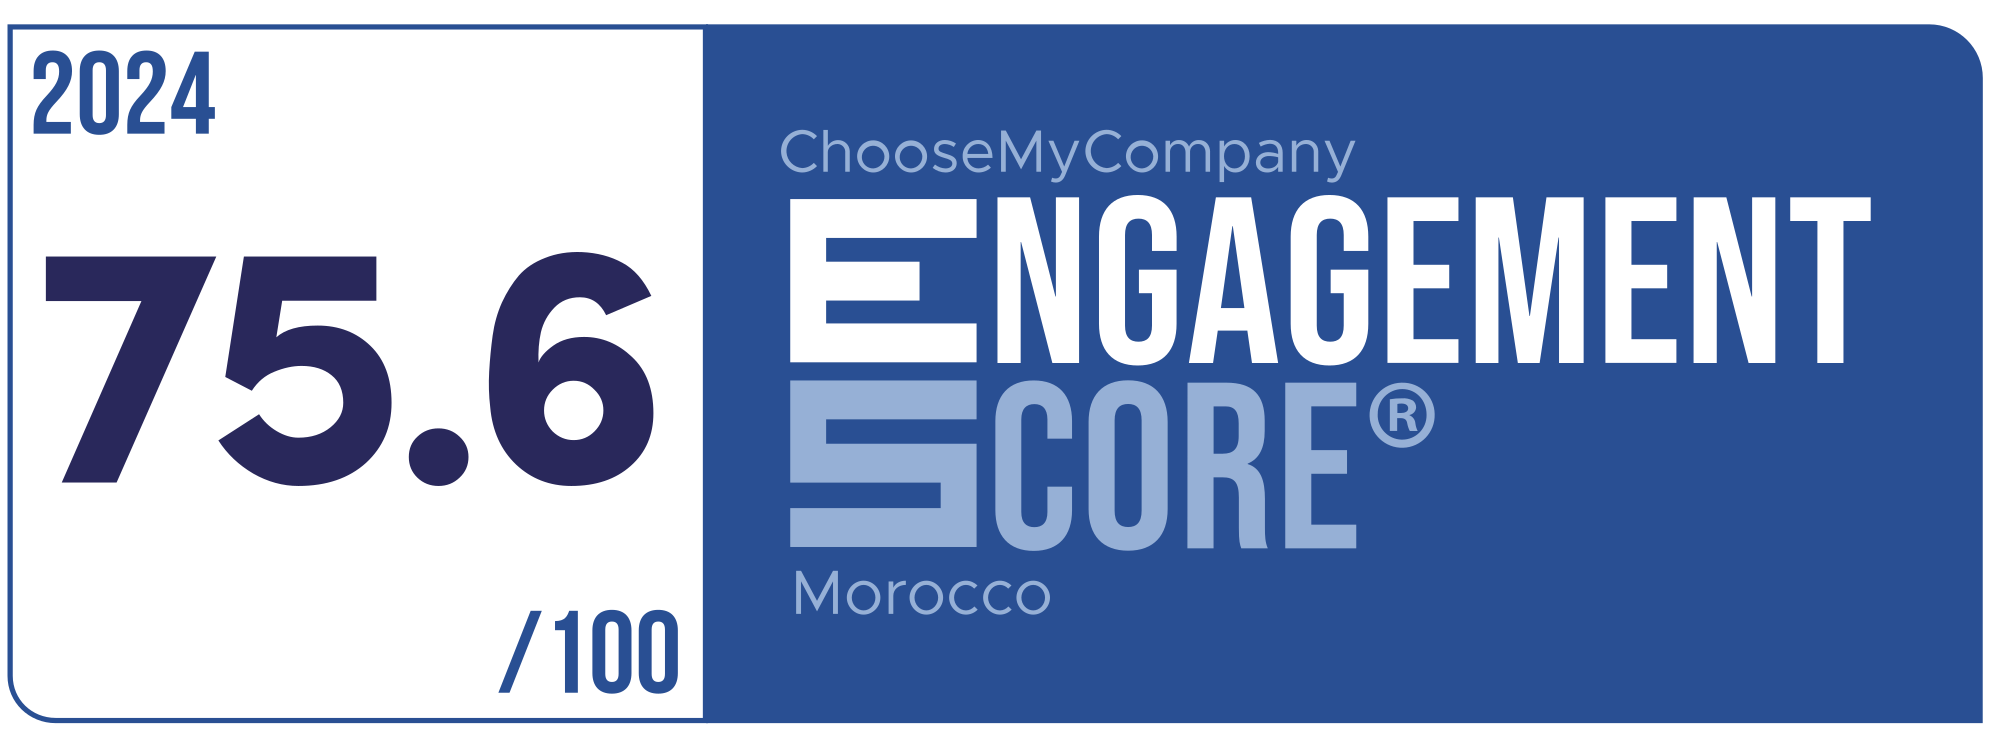 Label Engagement Score 2024 Morocco